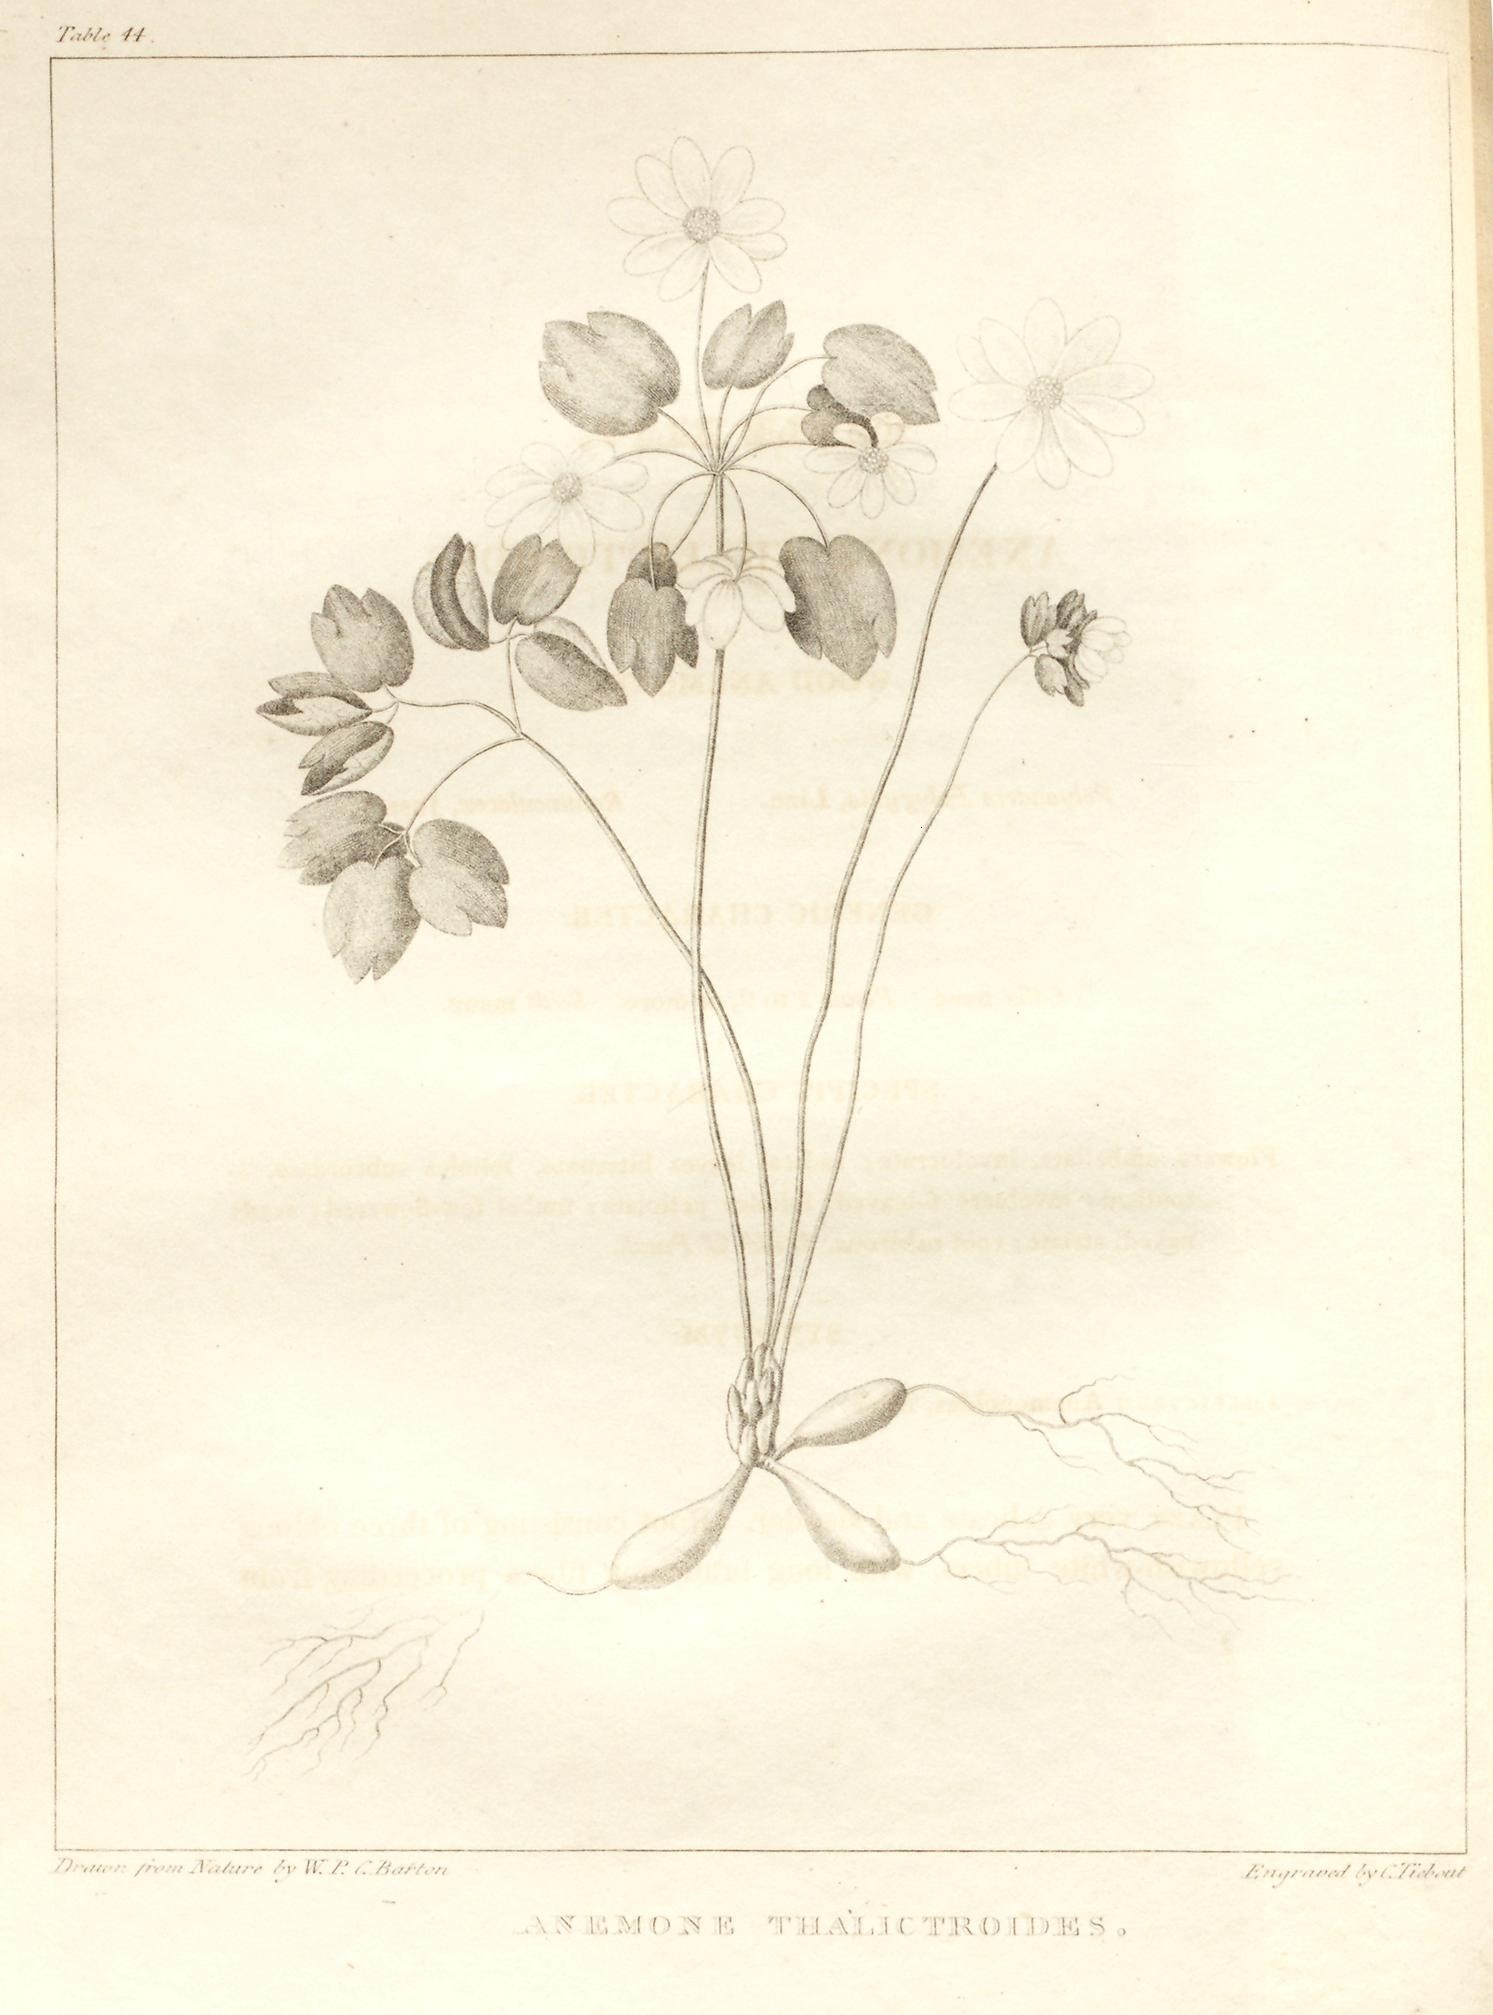 1822 Rue-anemone botanical illustration by William P. C. Barton.